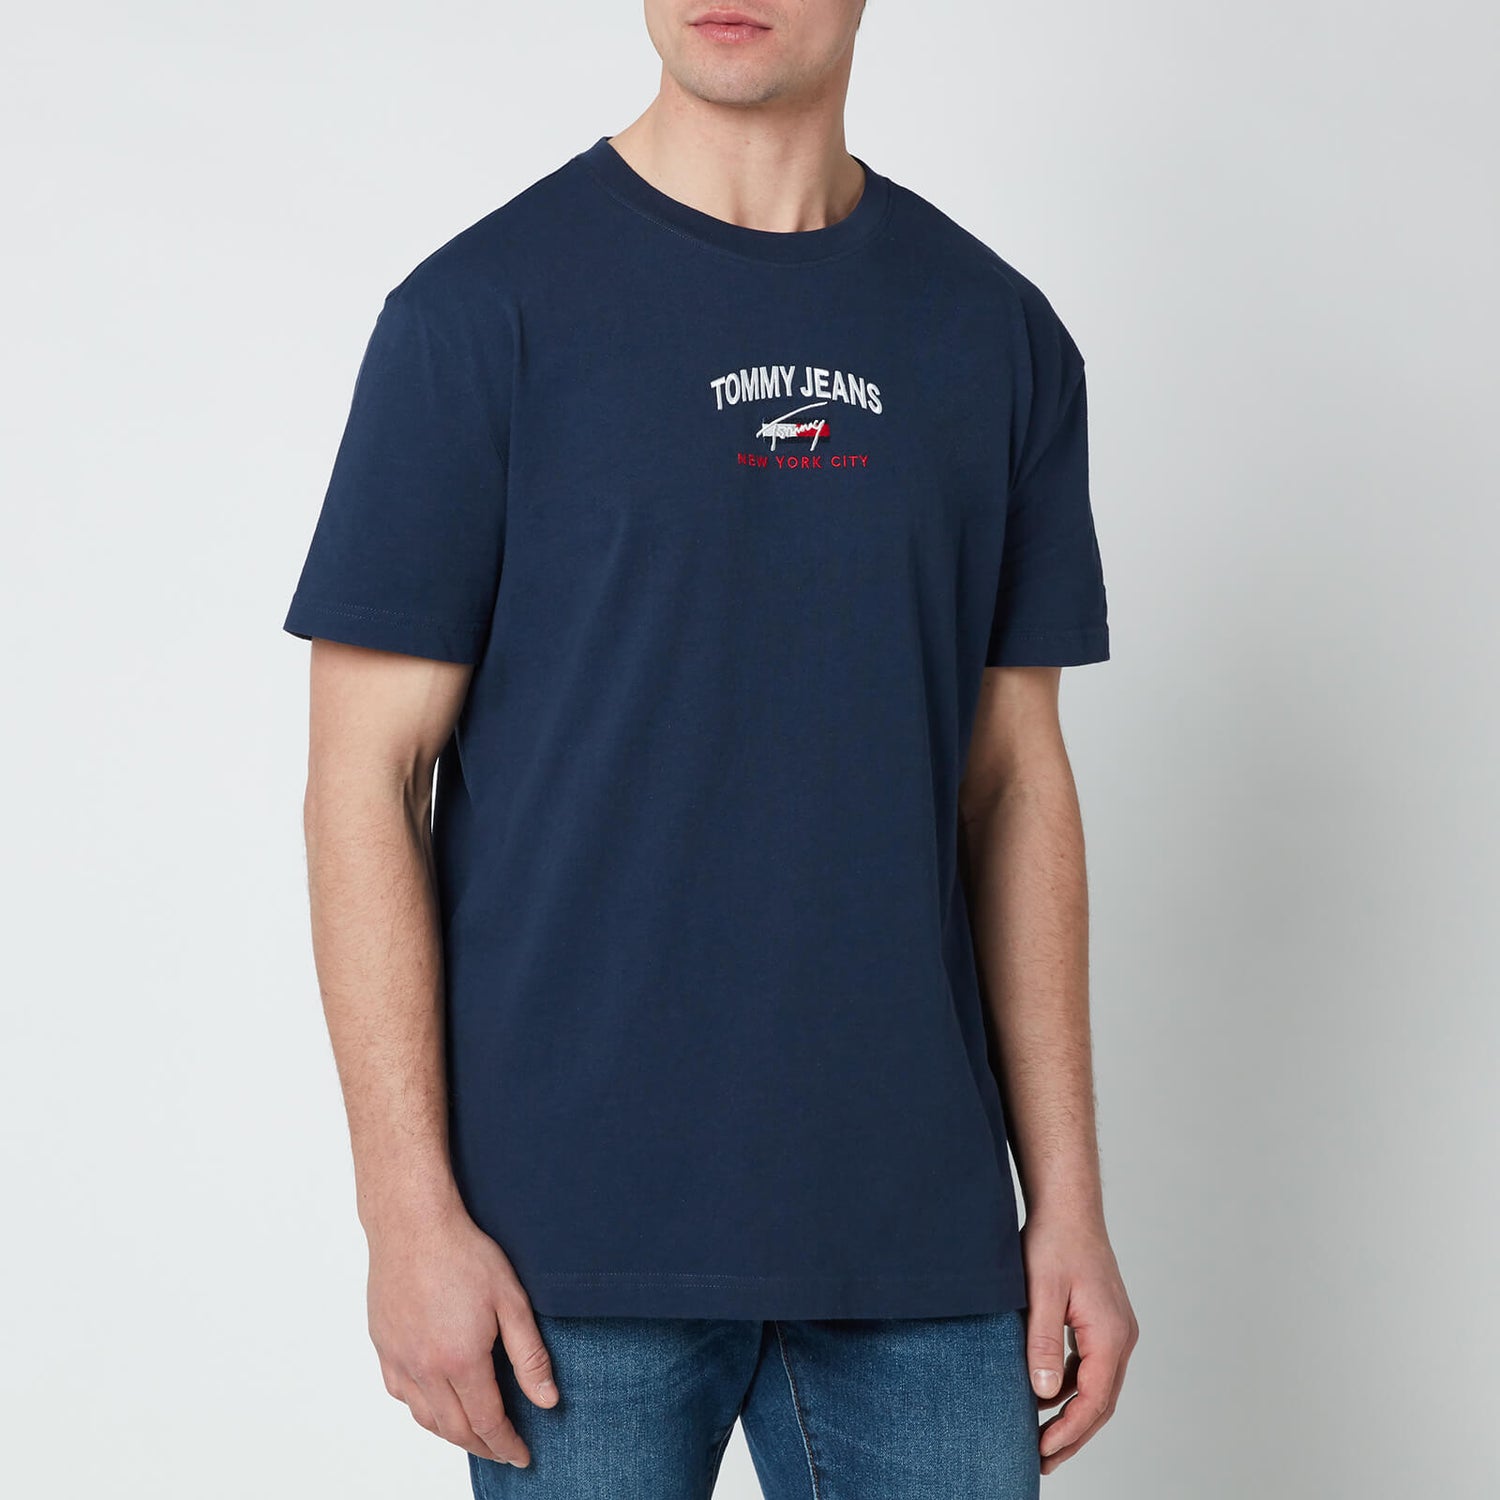 Tommy Jeans Men's Timeless Script T-Shirt - Twilight Navy